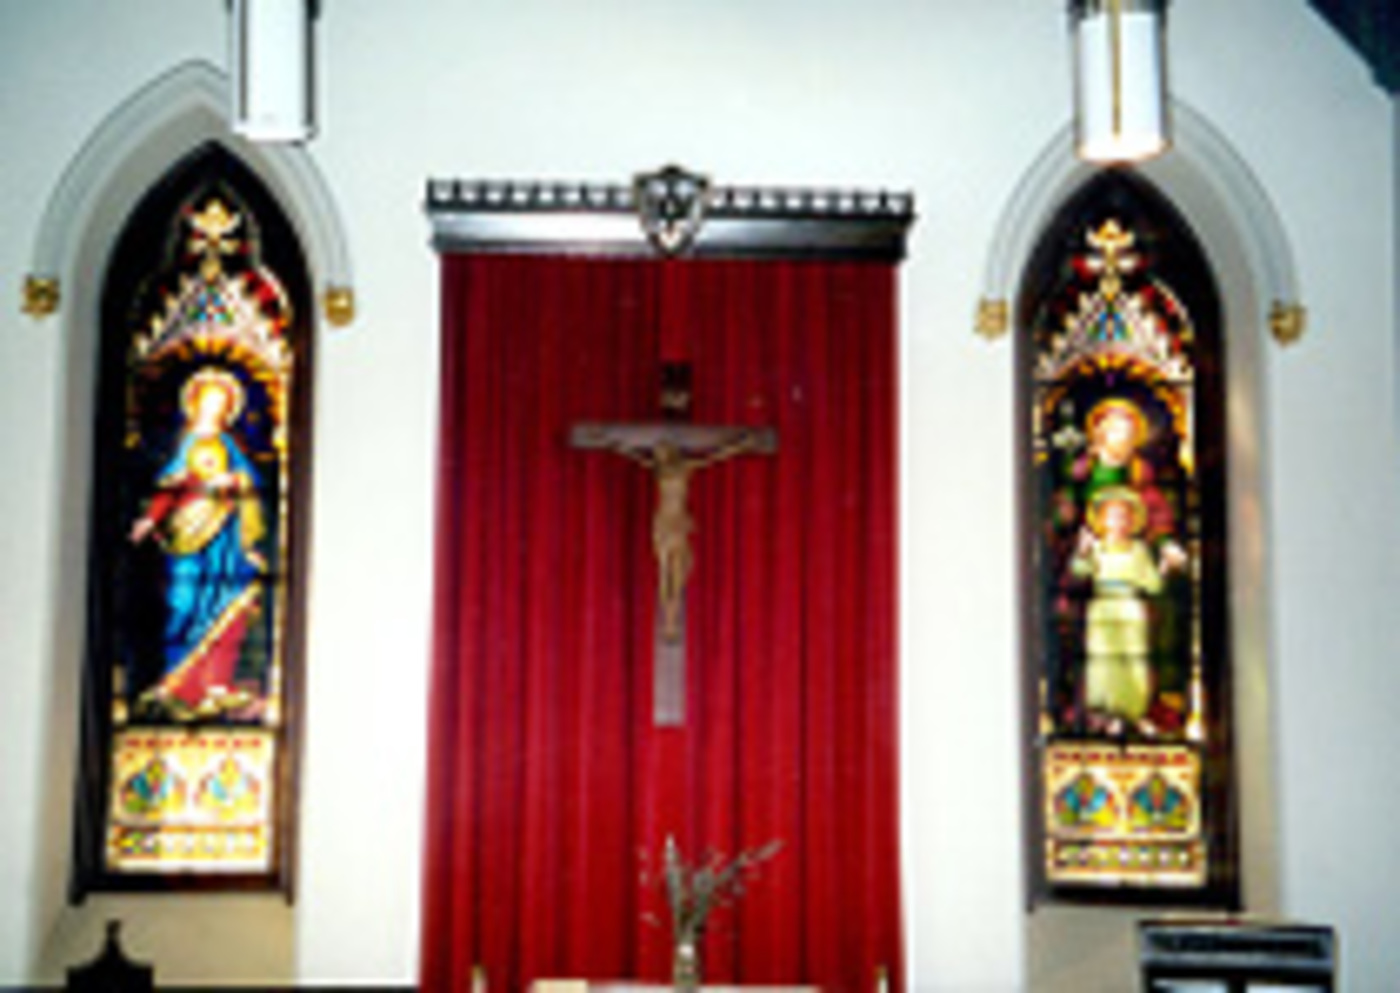 chapel entrance at St. Francis Xavier church in Park Slope, Brooklyn